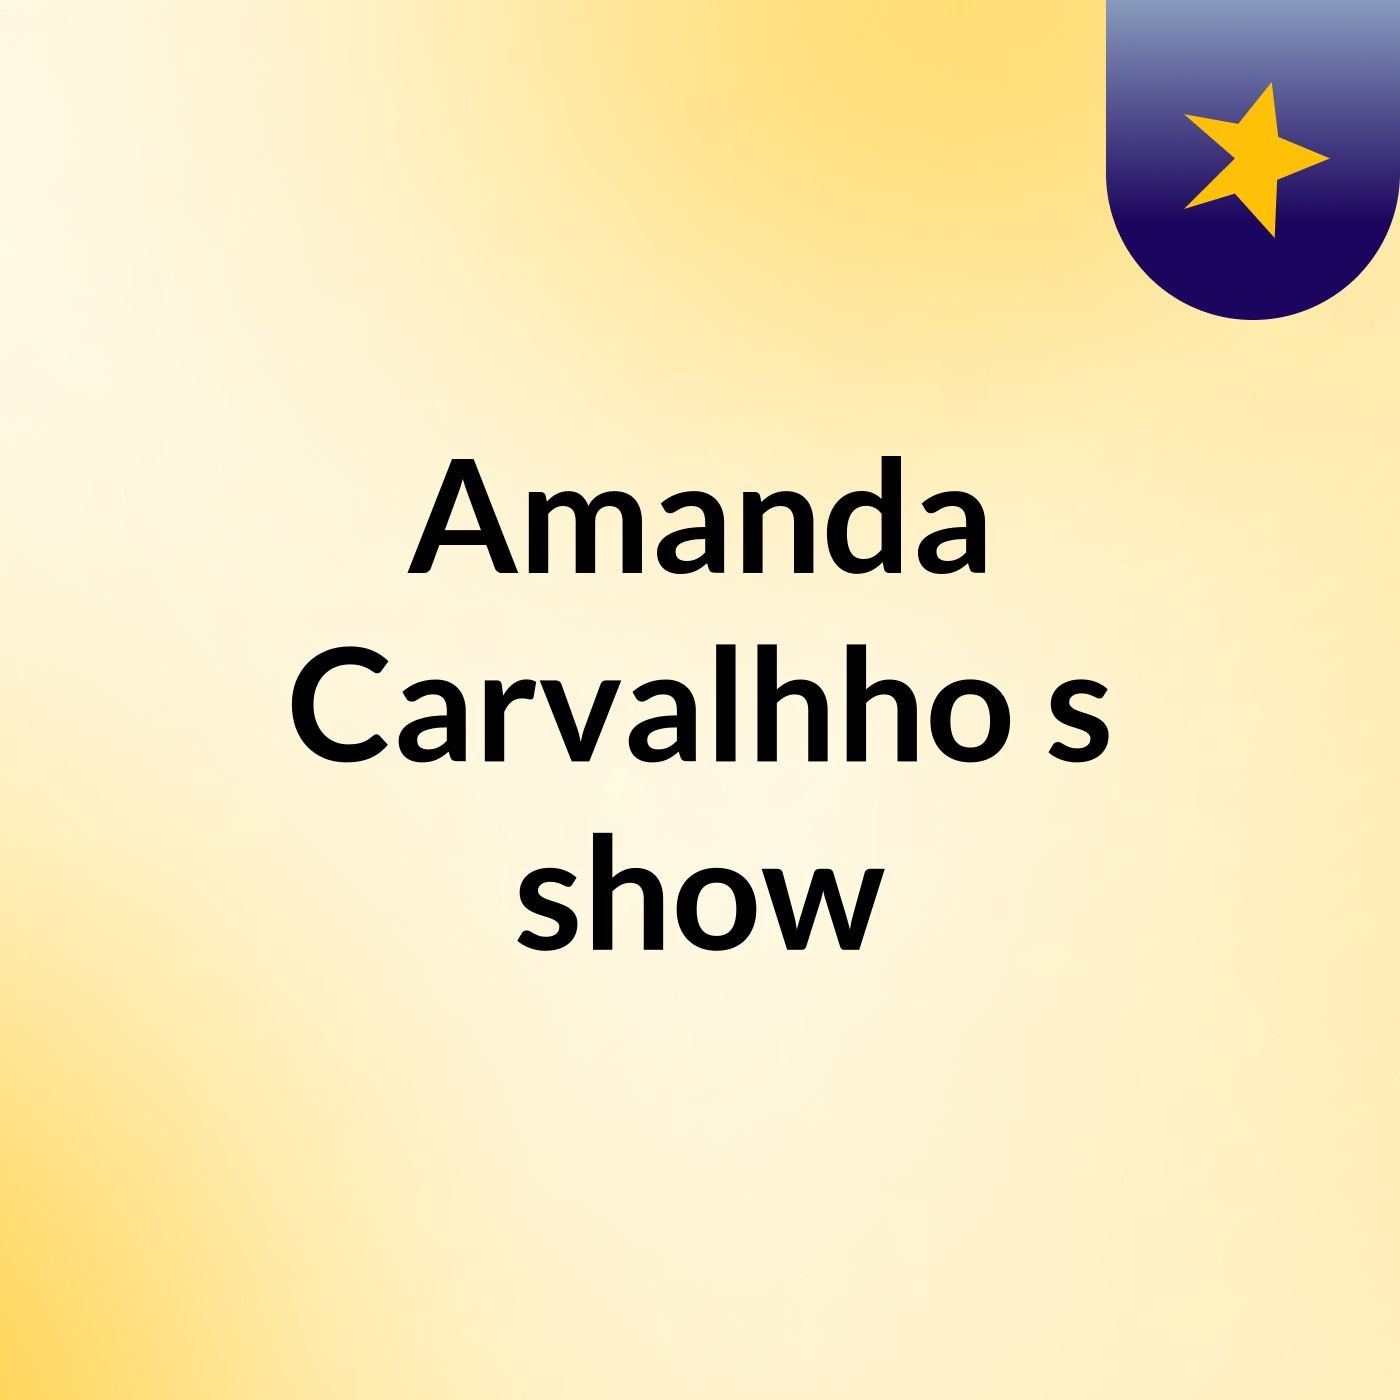 Amanda Carvalhho's show